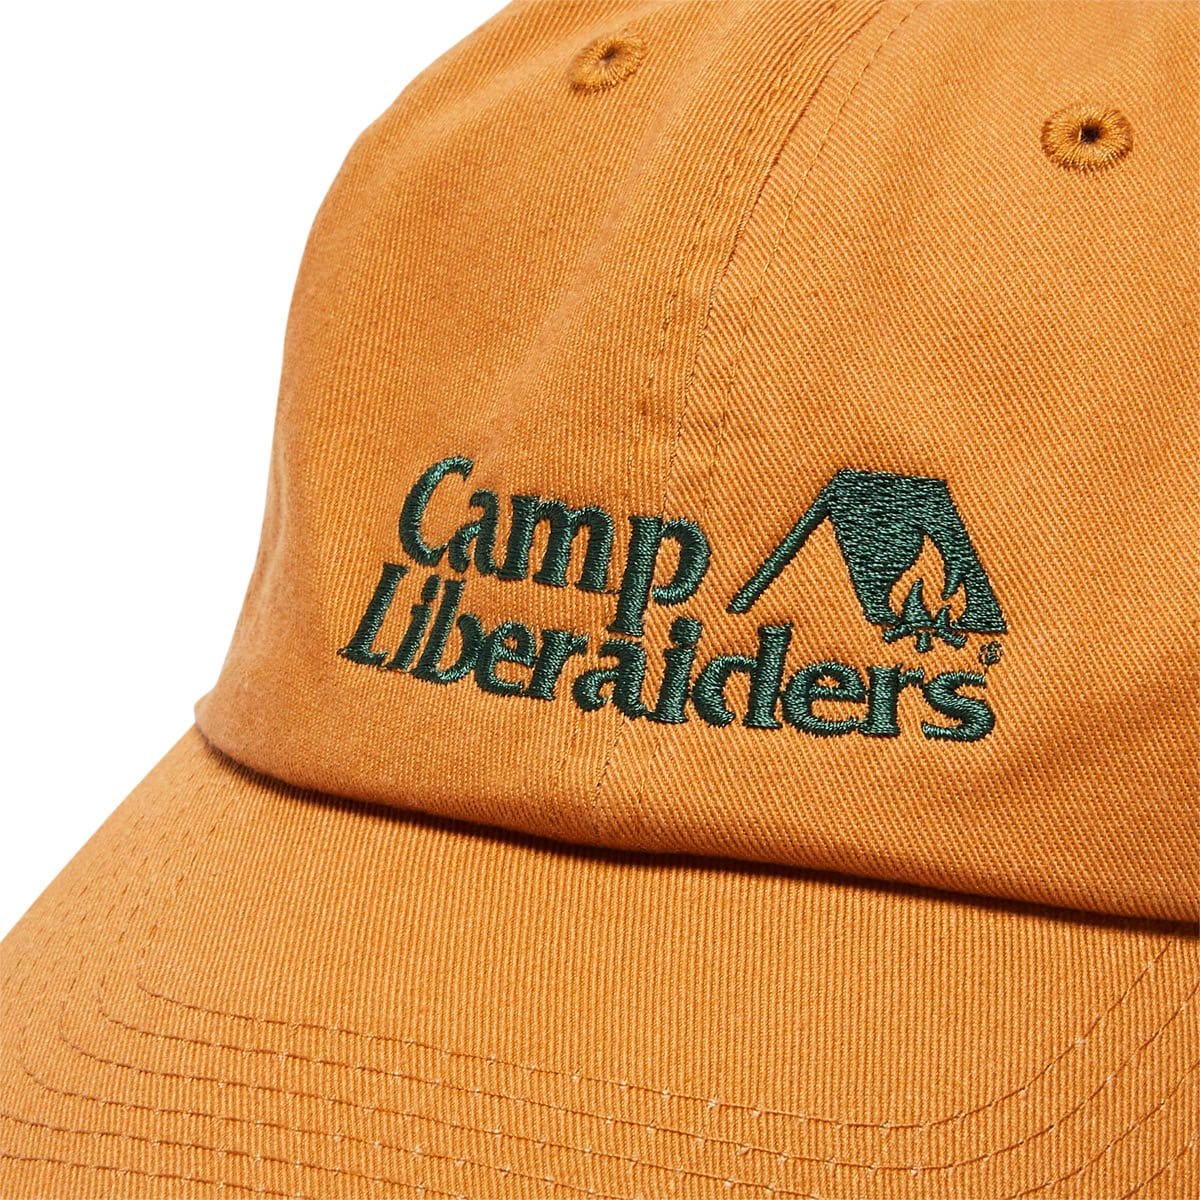 Liberaiders Headwear BROWN / OS CAMP LIBERAIDERS 6PANEL CAP